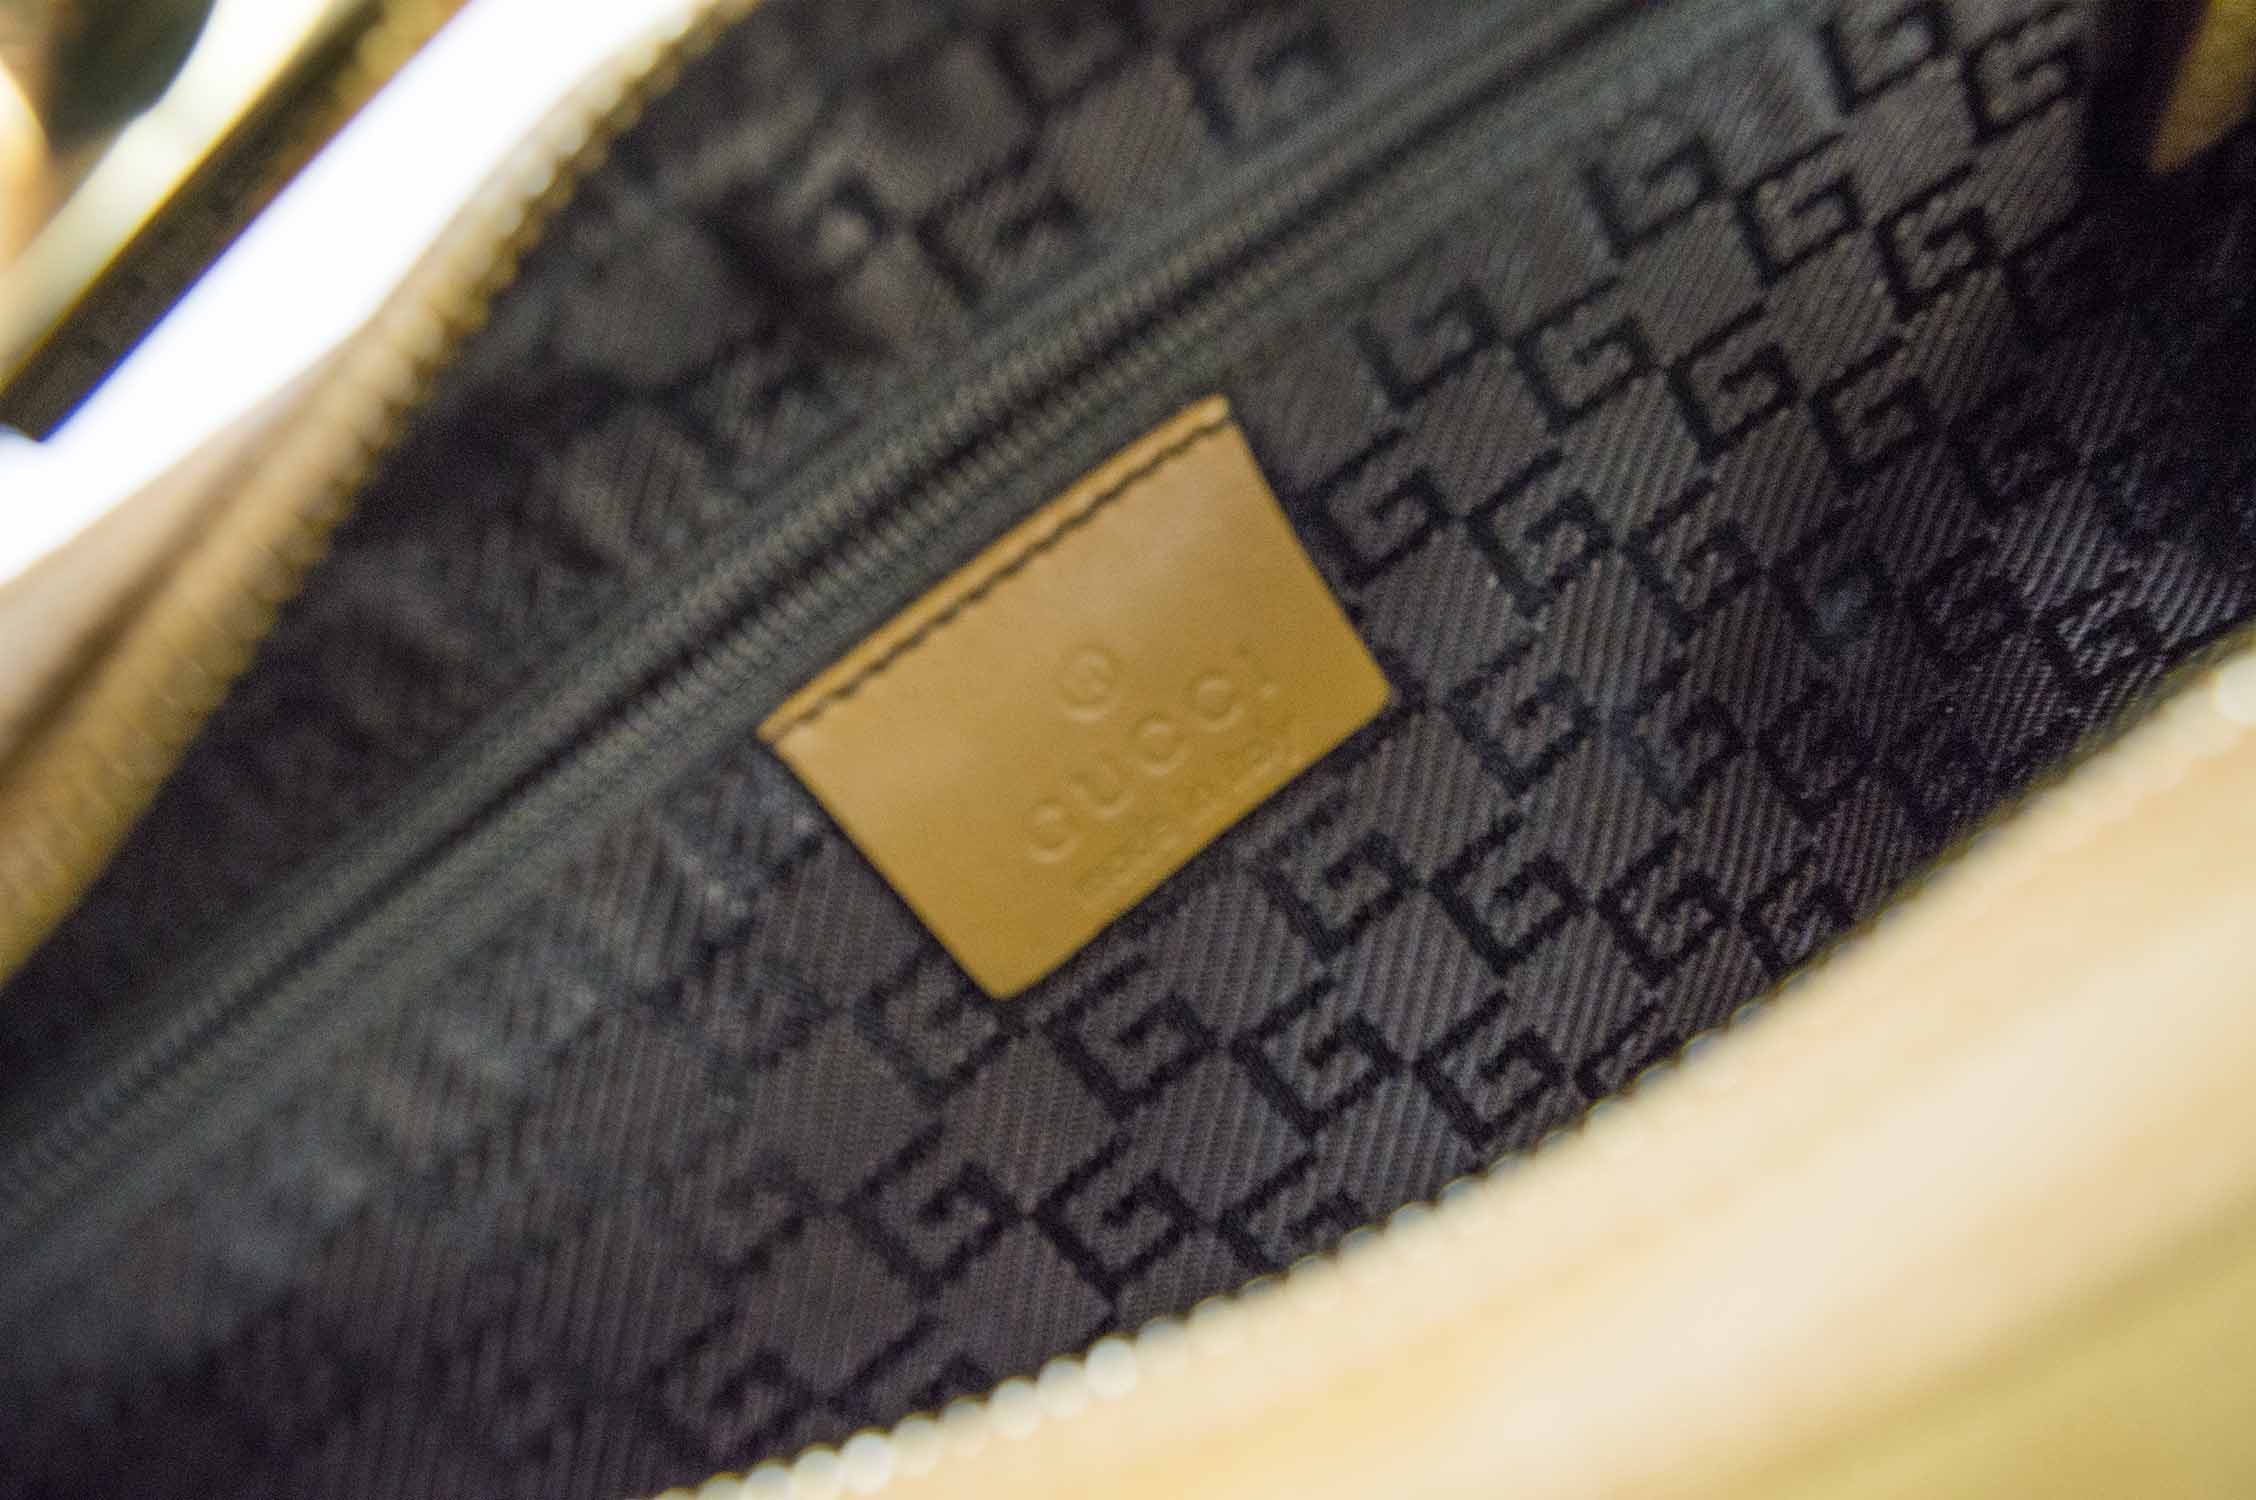 Gucci monogram gg gold leather speedy bag at 1stDibs